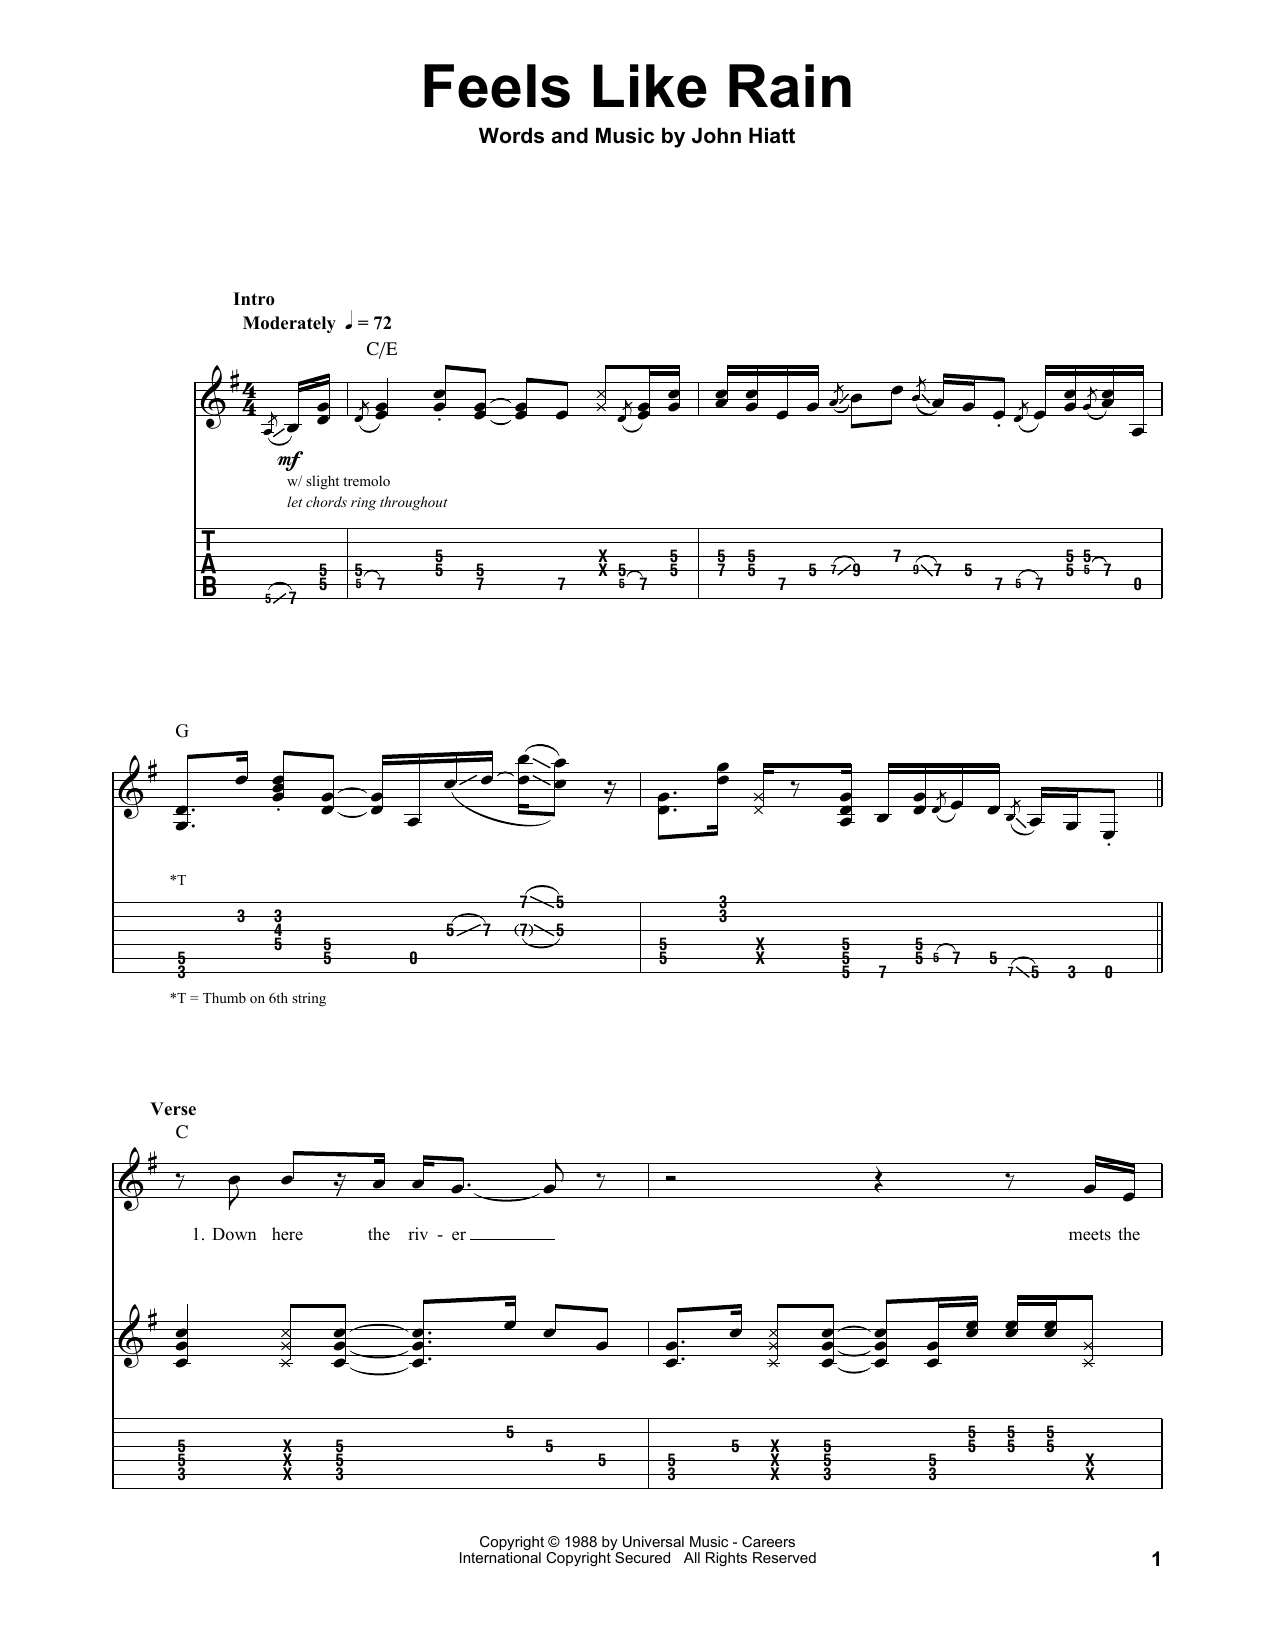 Buddy Guy Feels Like Rain Sheet Music Notes & Chords for Guitar Tab Play-Along - Download or Print PDF